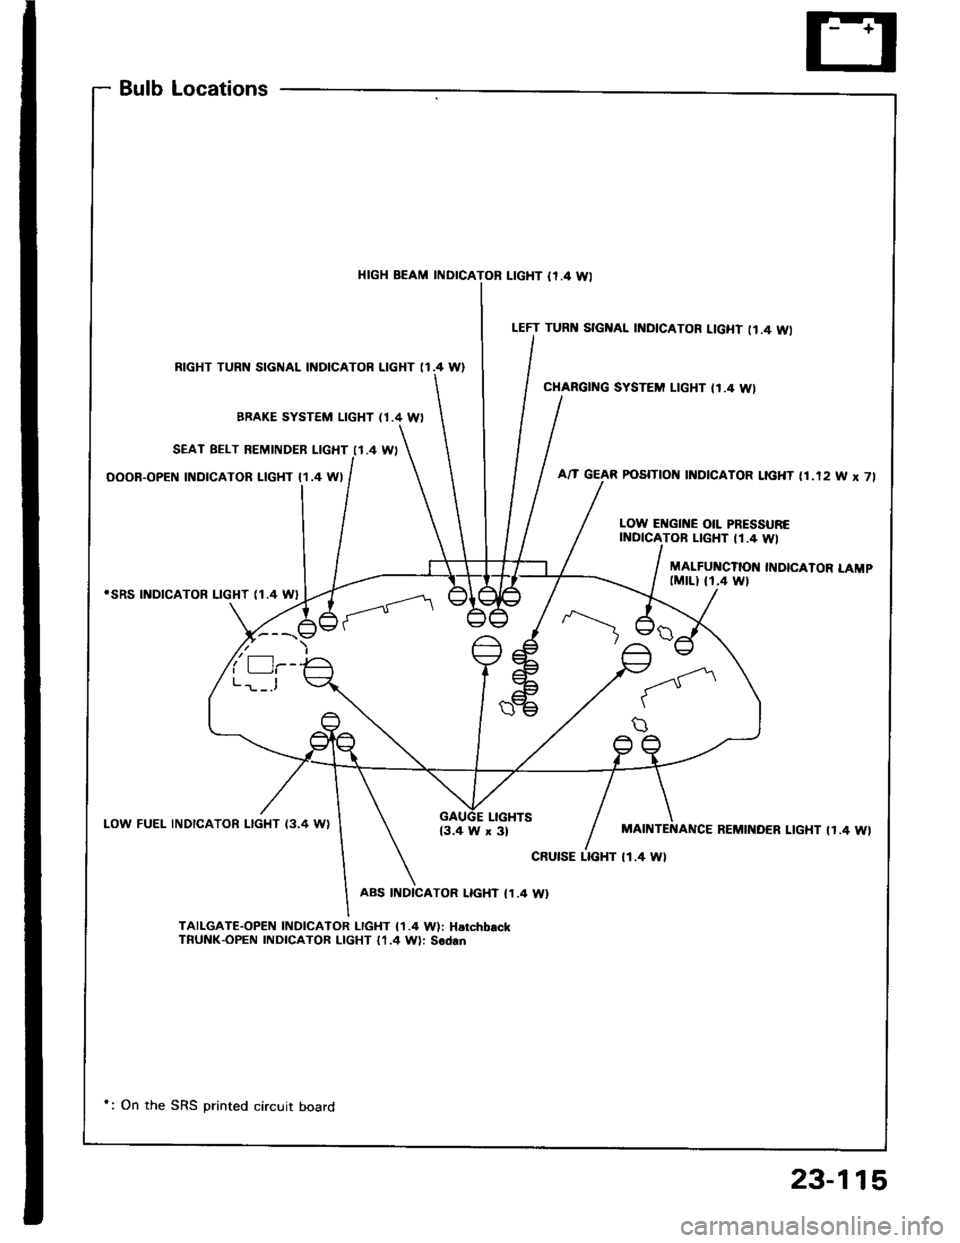 HONDA INTEGRA 1994 4.G Workshop Manual BulbLocations
HIGH BEAM INDICAL|GHT {r.4 Wl
RIGHT TURN SIGNAL INDICATOR LIGHT (I.4 W}
BBAKE SYSTEM LIGHT (1.4 W)
SEAT BELT REMINDER LIGHT I1.4 WI
OOOR-OPEN INDICATOR LIGHT {1.4 WI
iSRS INDICATOR LIGHT